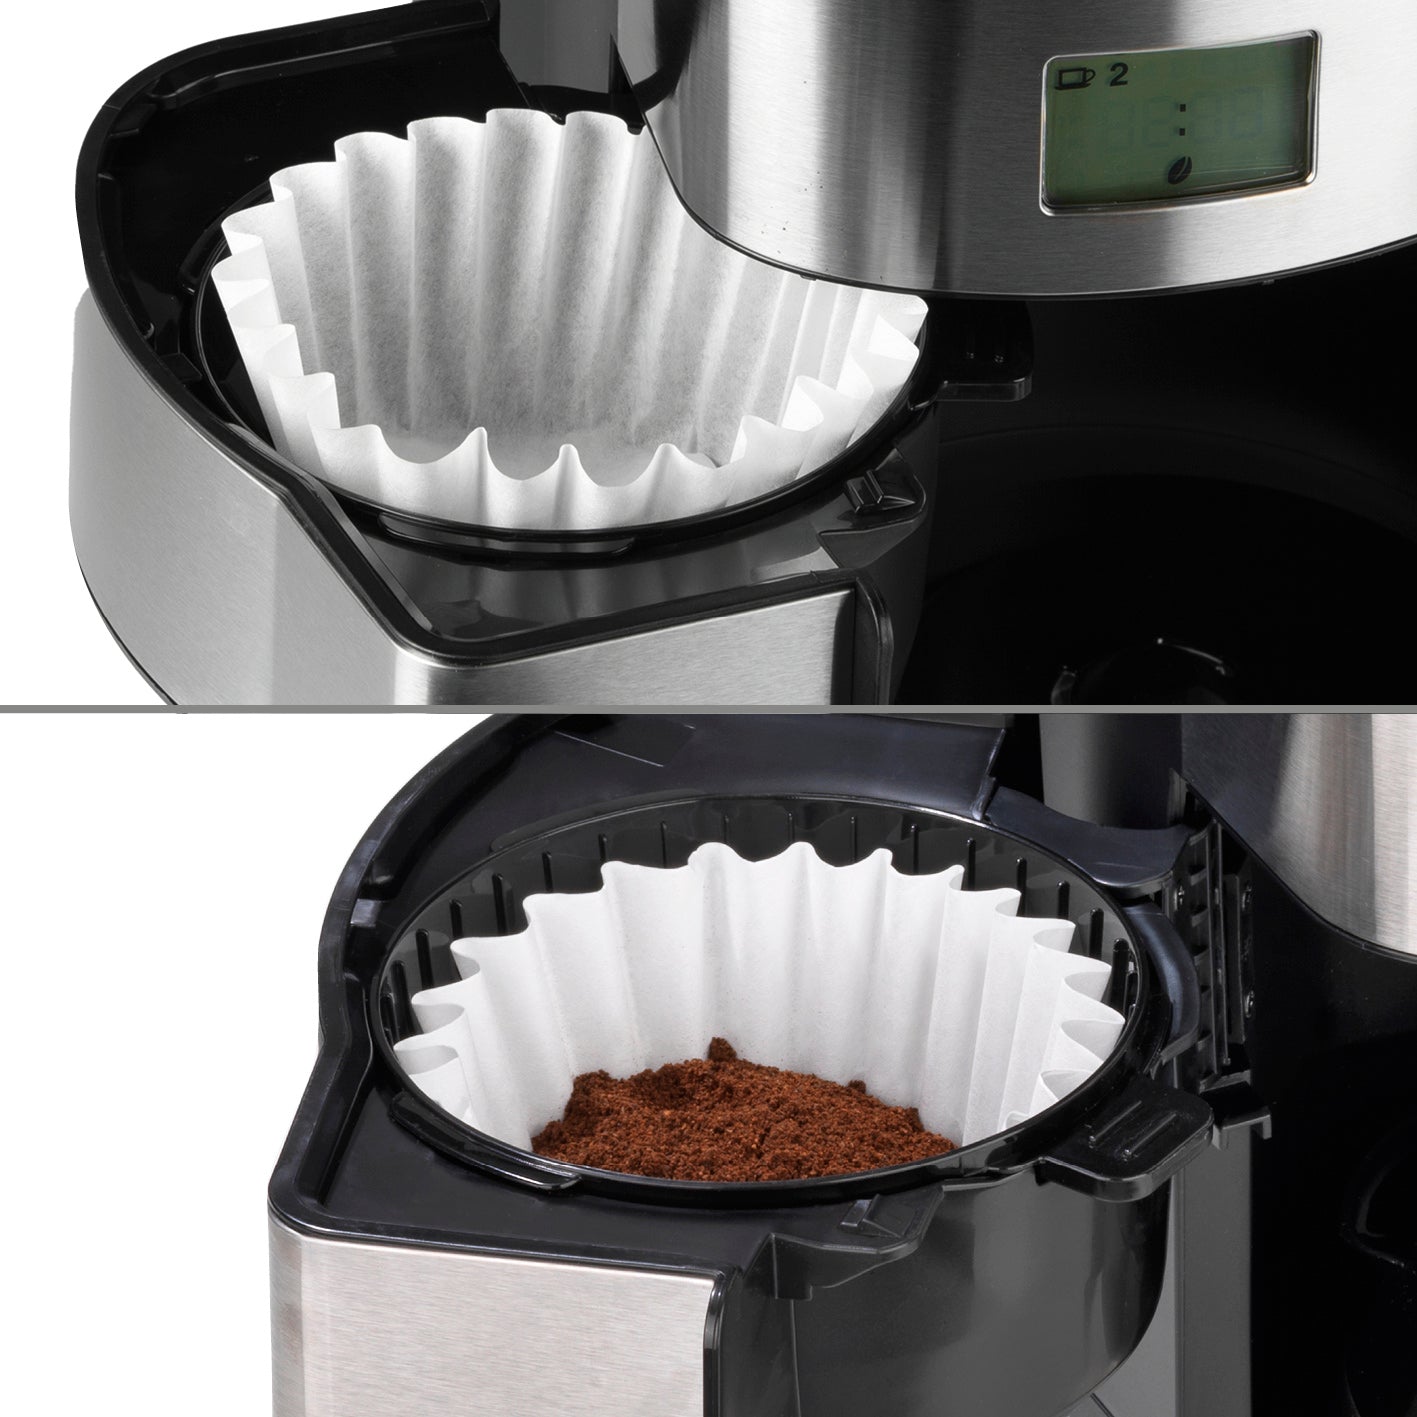 Original Universal-Korbfiltertüten 100 Stück - 10 Tassen | 90/220mm Papierfilter für Kaffeemaschinen mit Korbfilter